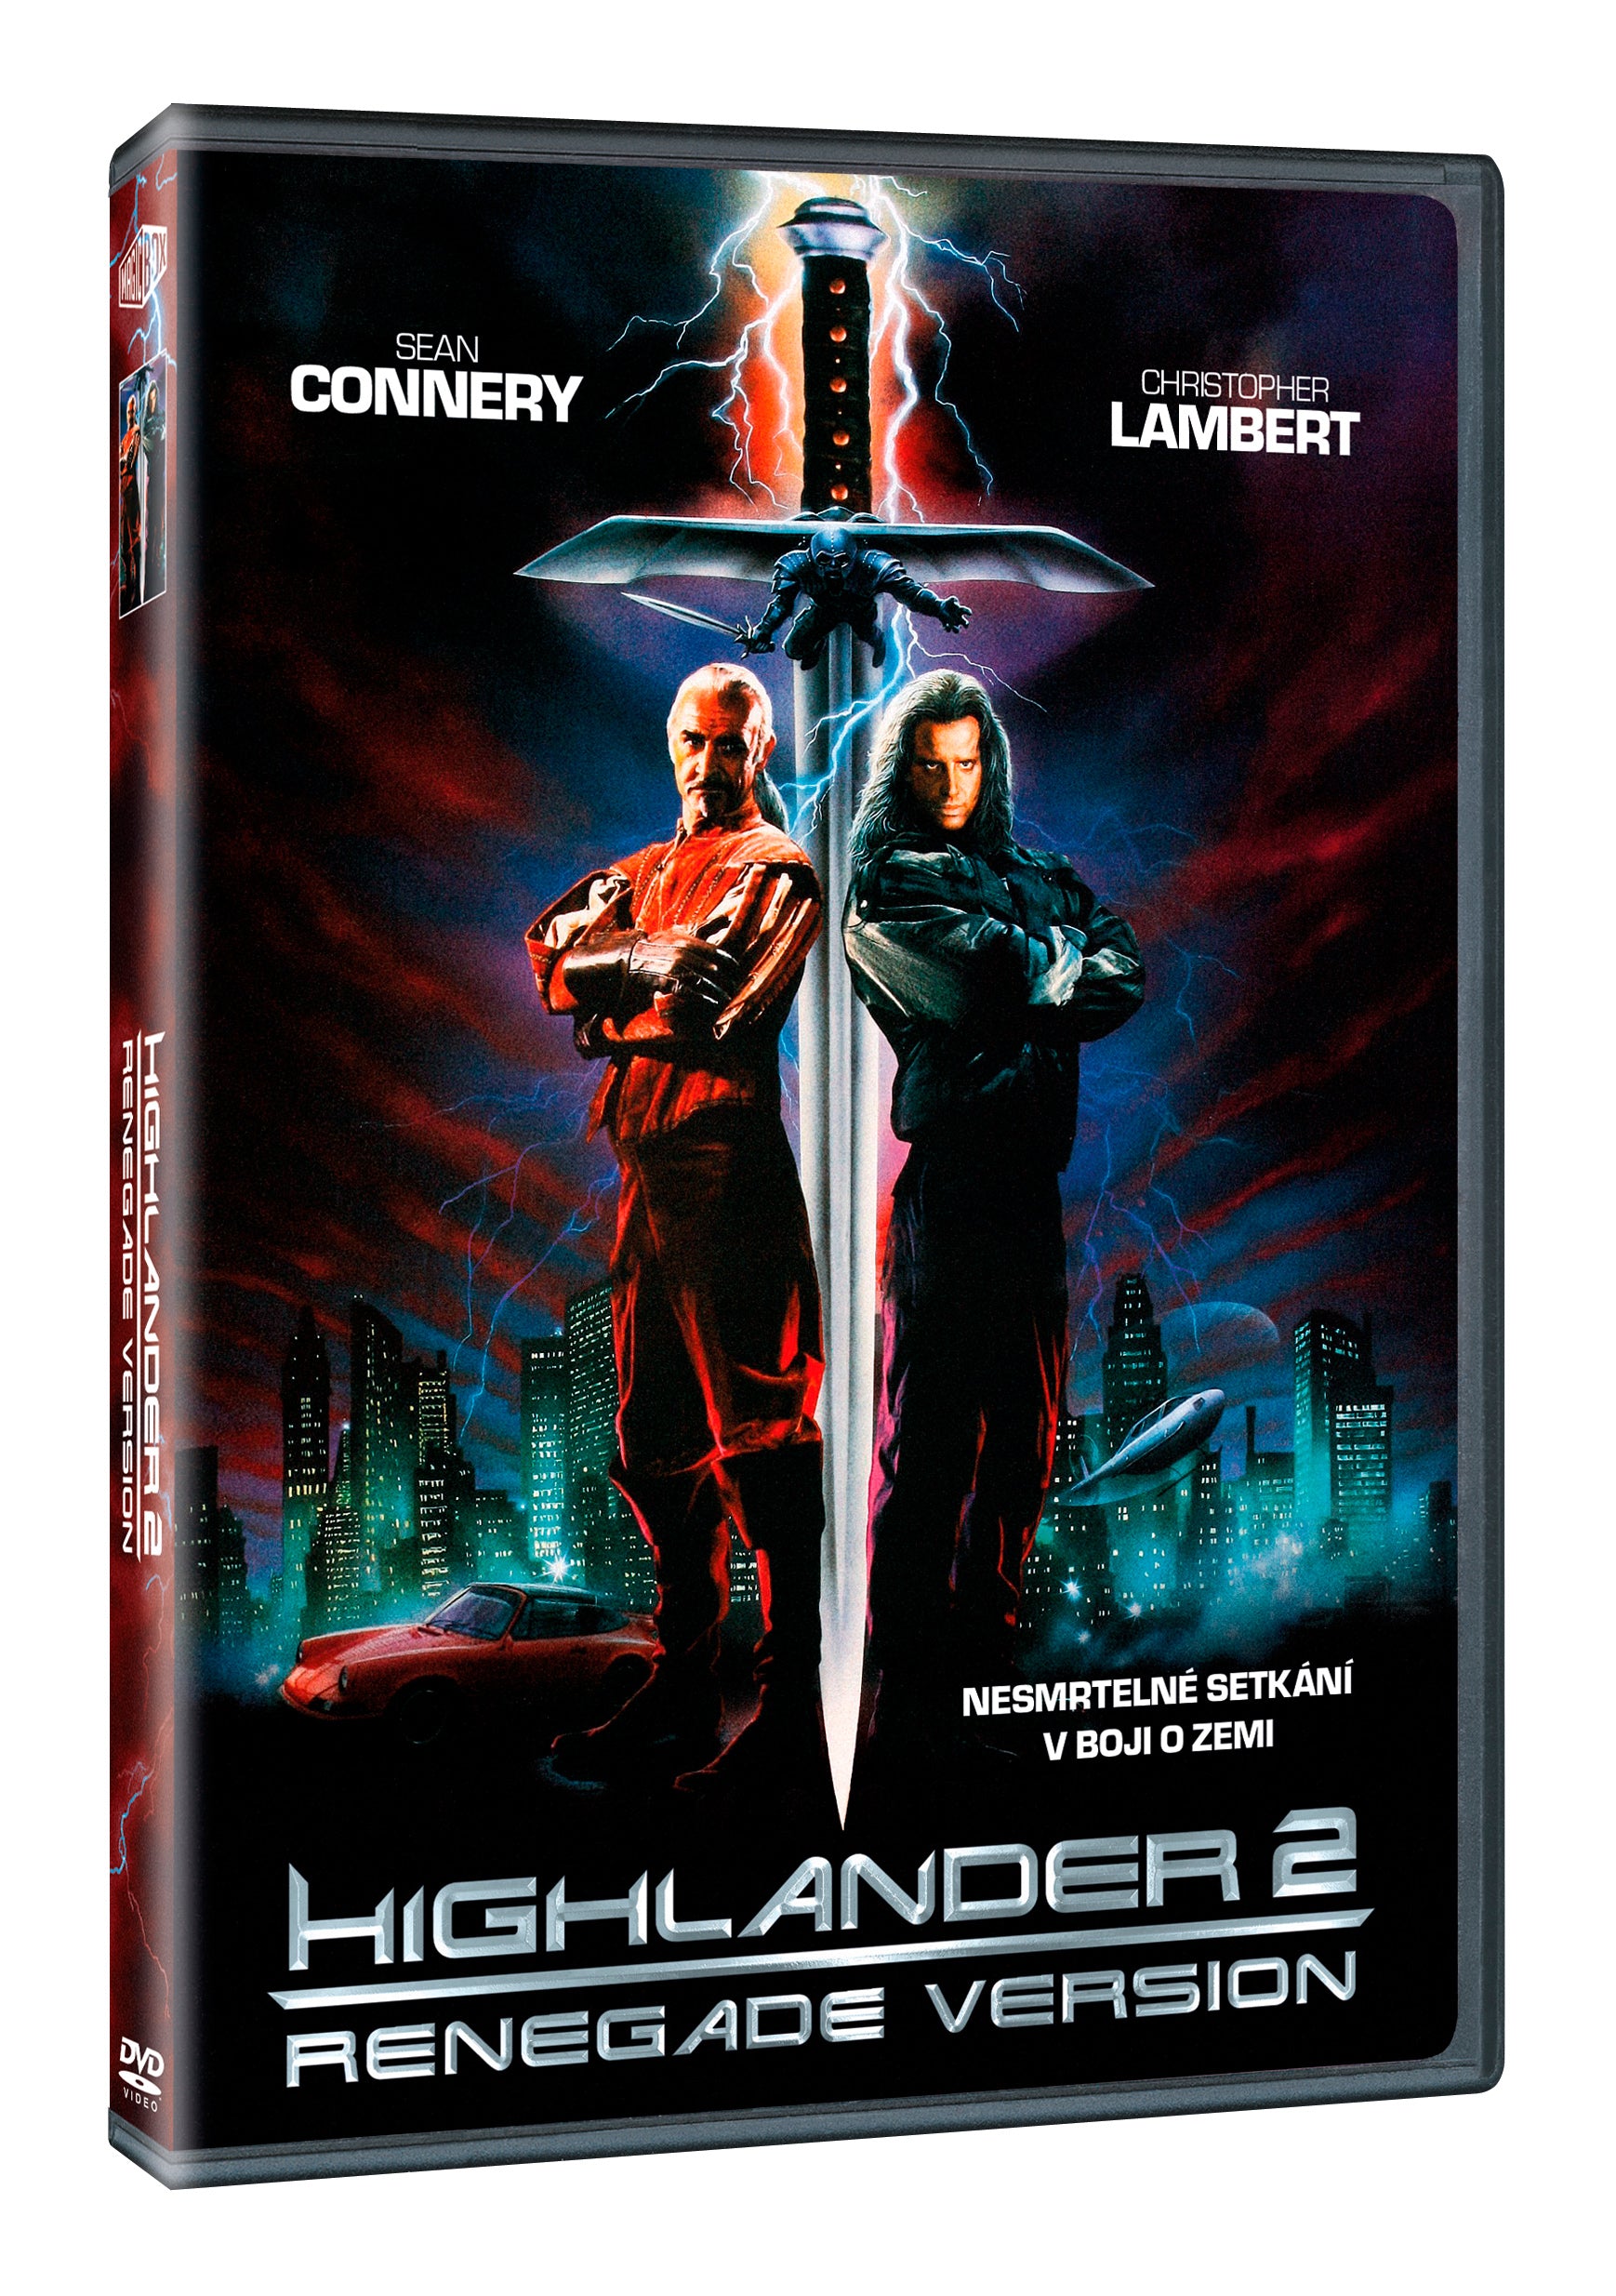 Highlander 2 - Renegade Version DVD / Highlander 2 - Renegade Version